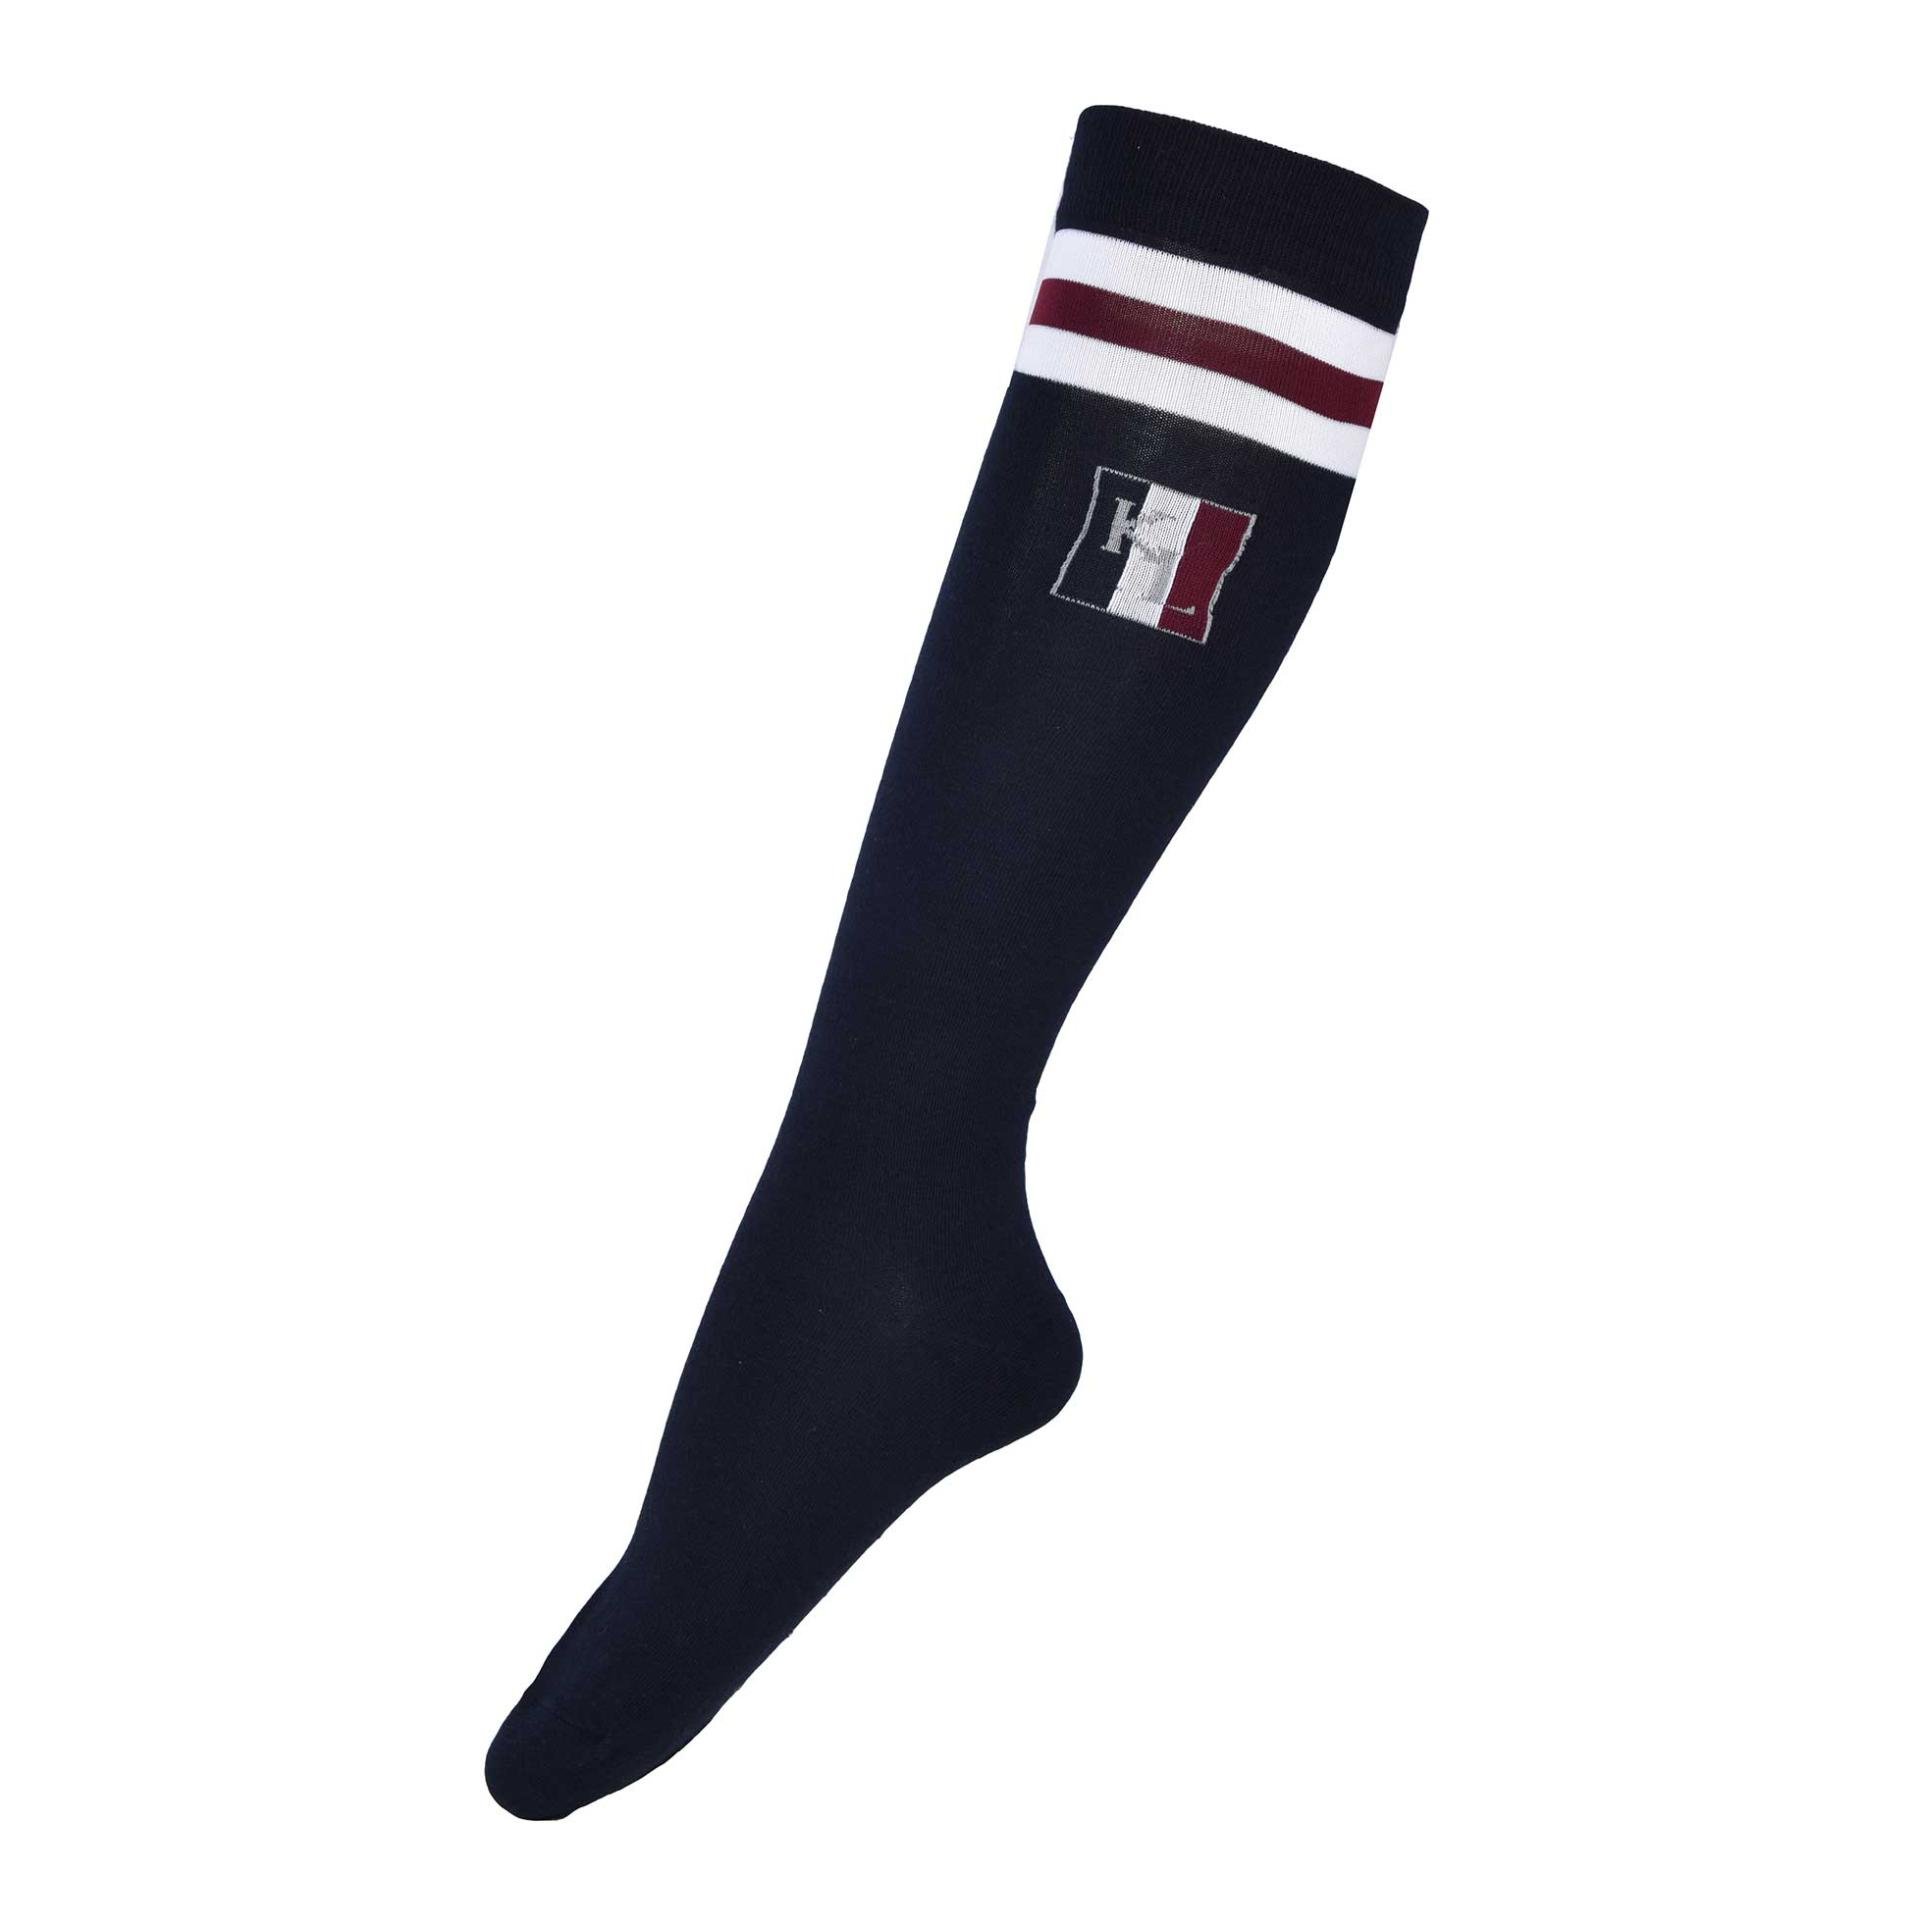 Reitsocken Siena Multicolor  Strumpfe Socken Tolle Farben HKM 9196   NEU 